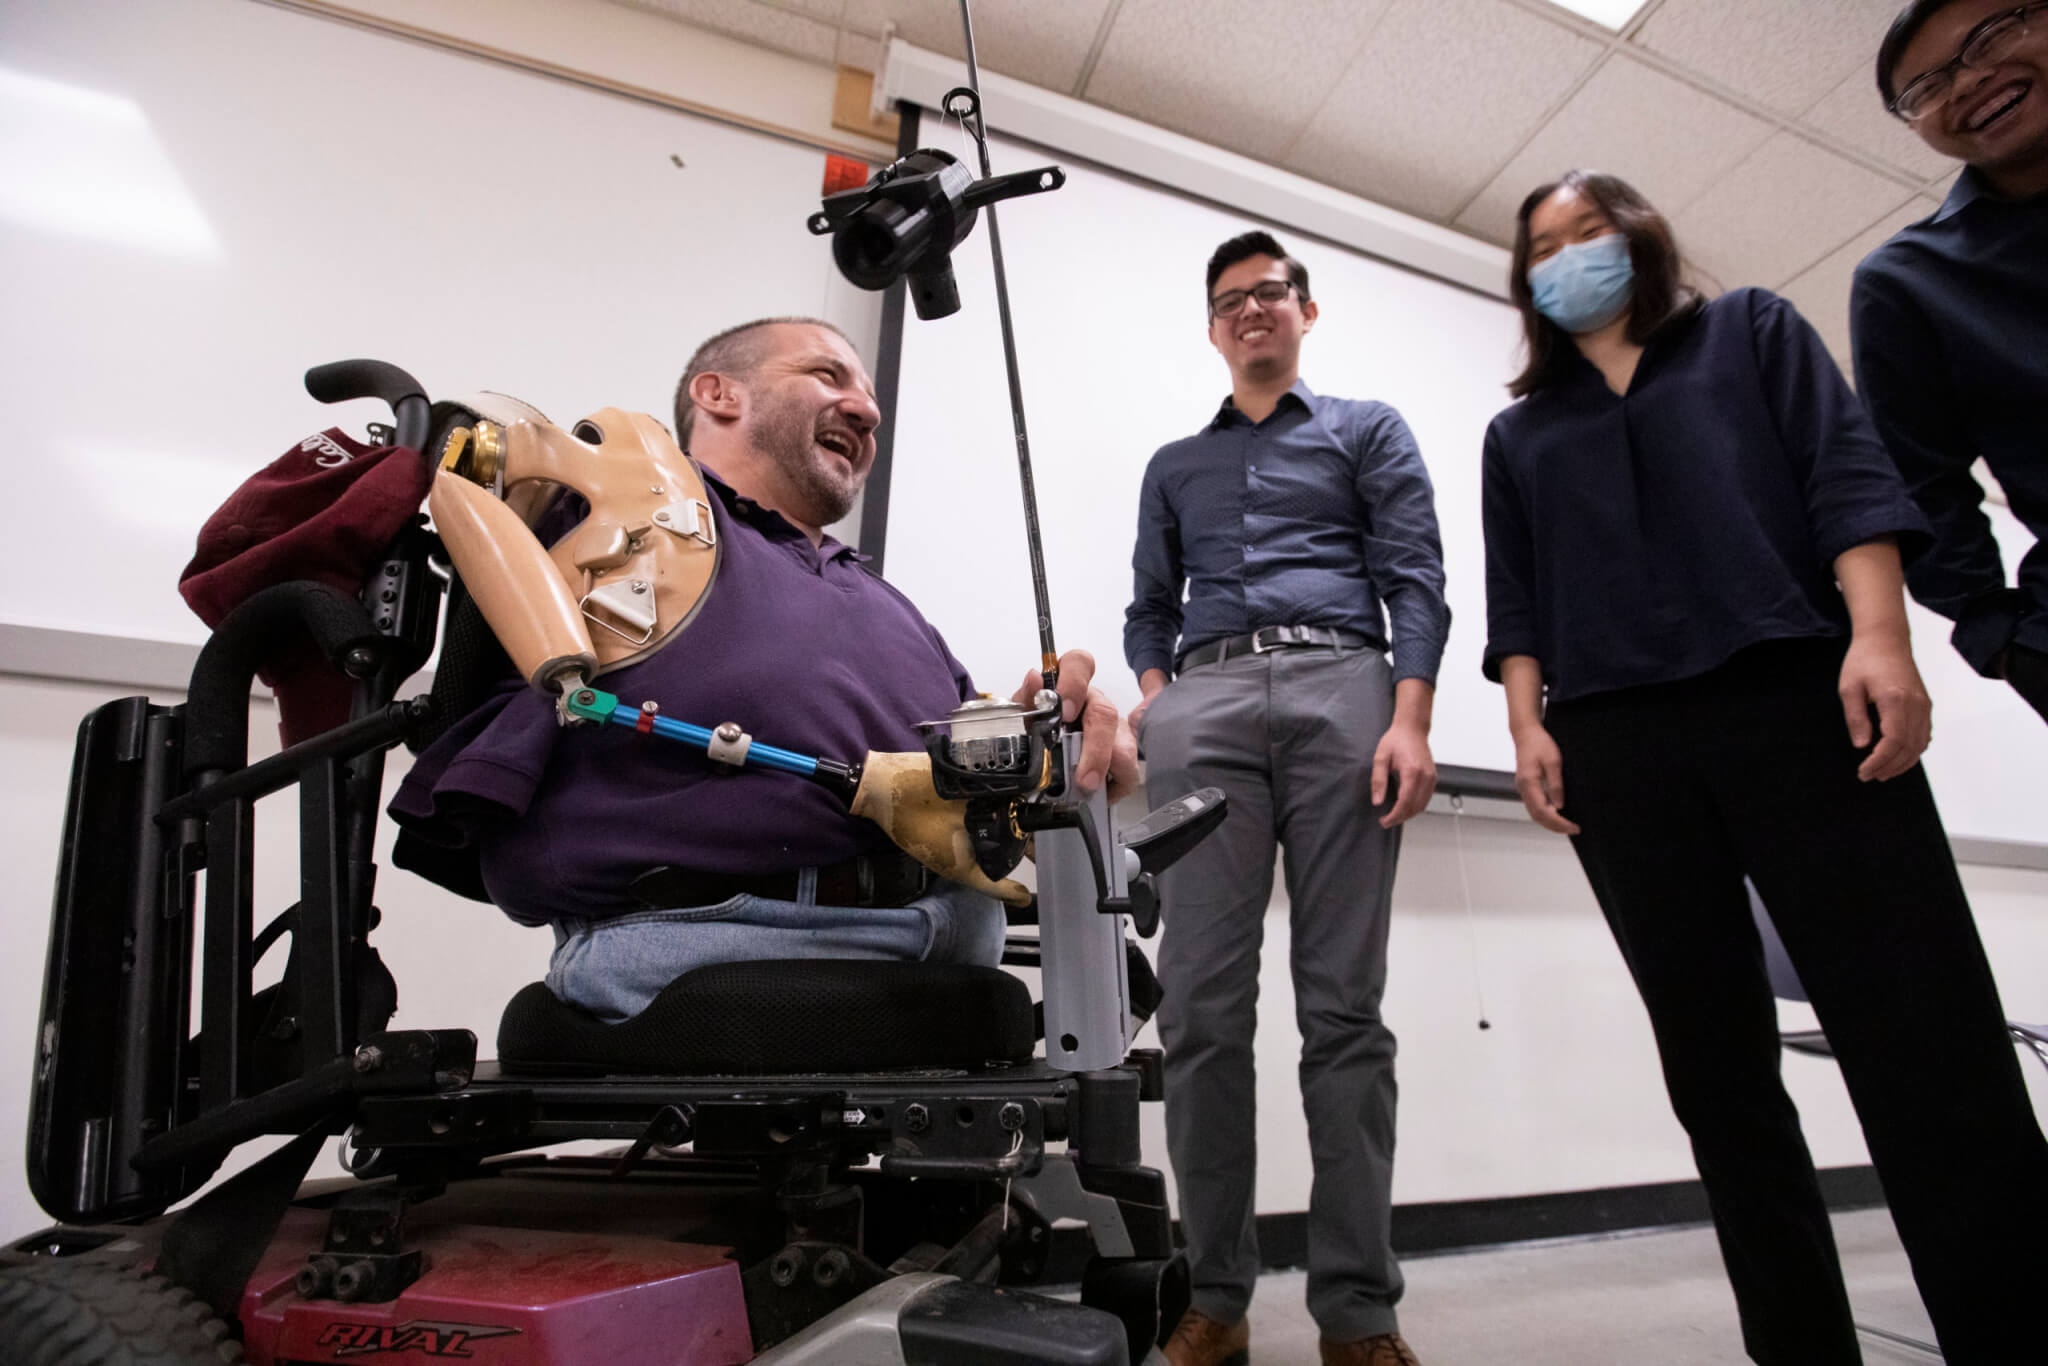 Stof Interpretatief Distributie Mechanical Engineering Students Design 3D-Printed Prosthetic Arm to Benefit  Disabled Individual | CSUF News